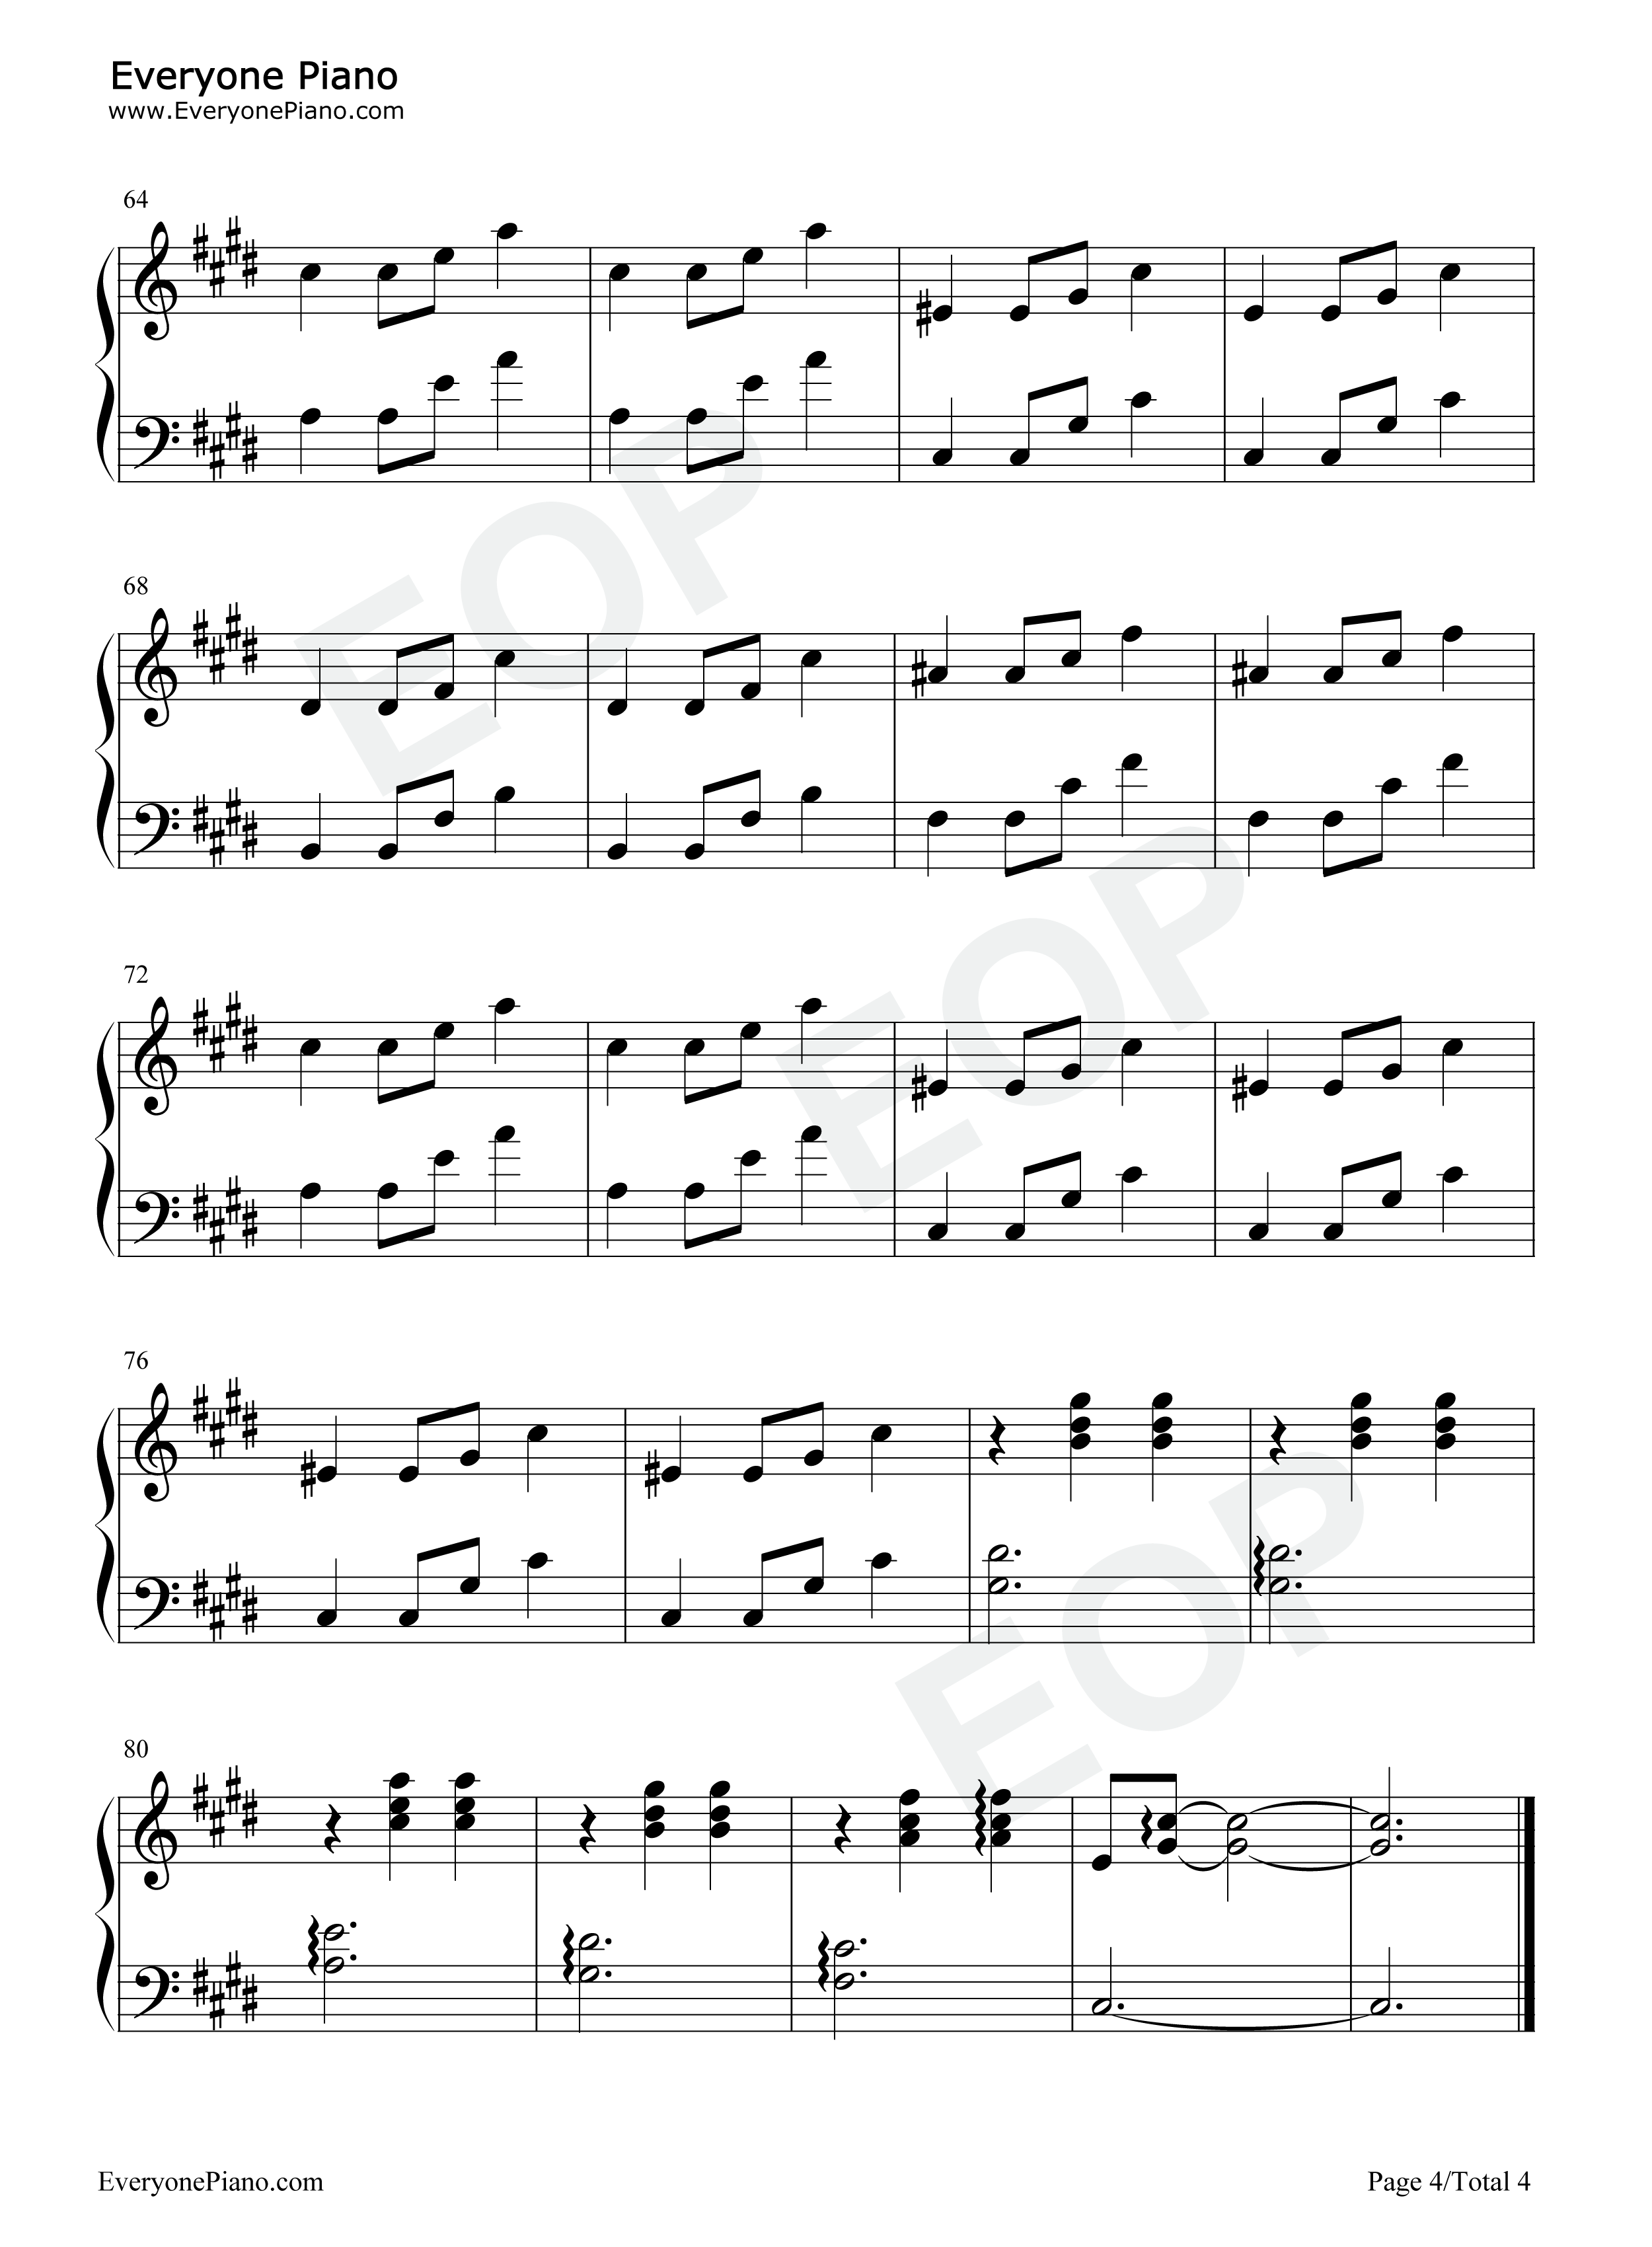 Suspirium钢琴谱-Thom Yorke-独奏五线谱